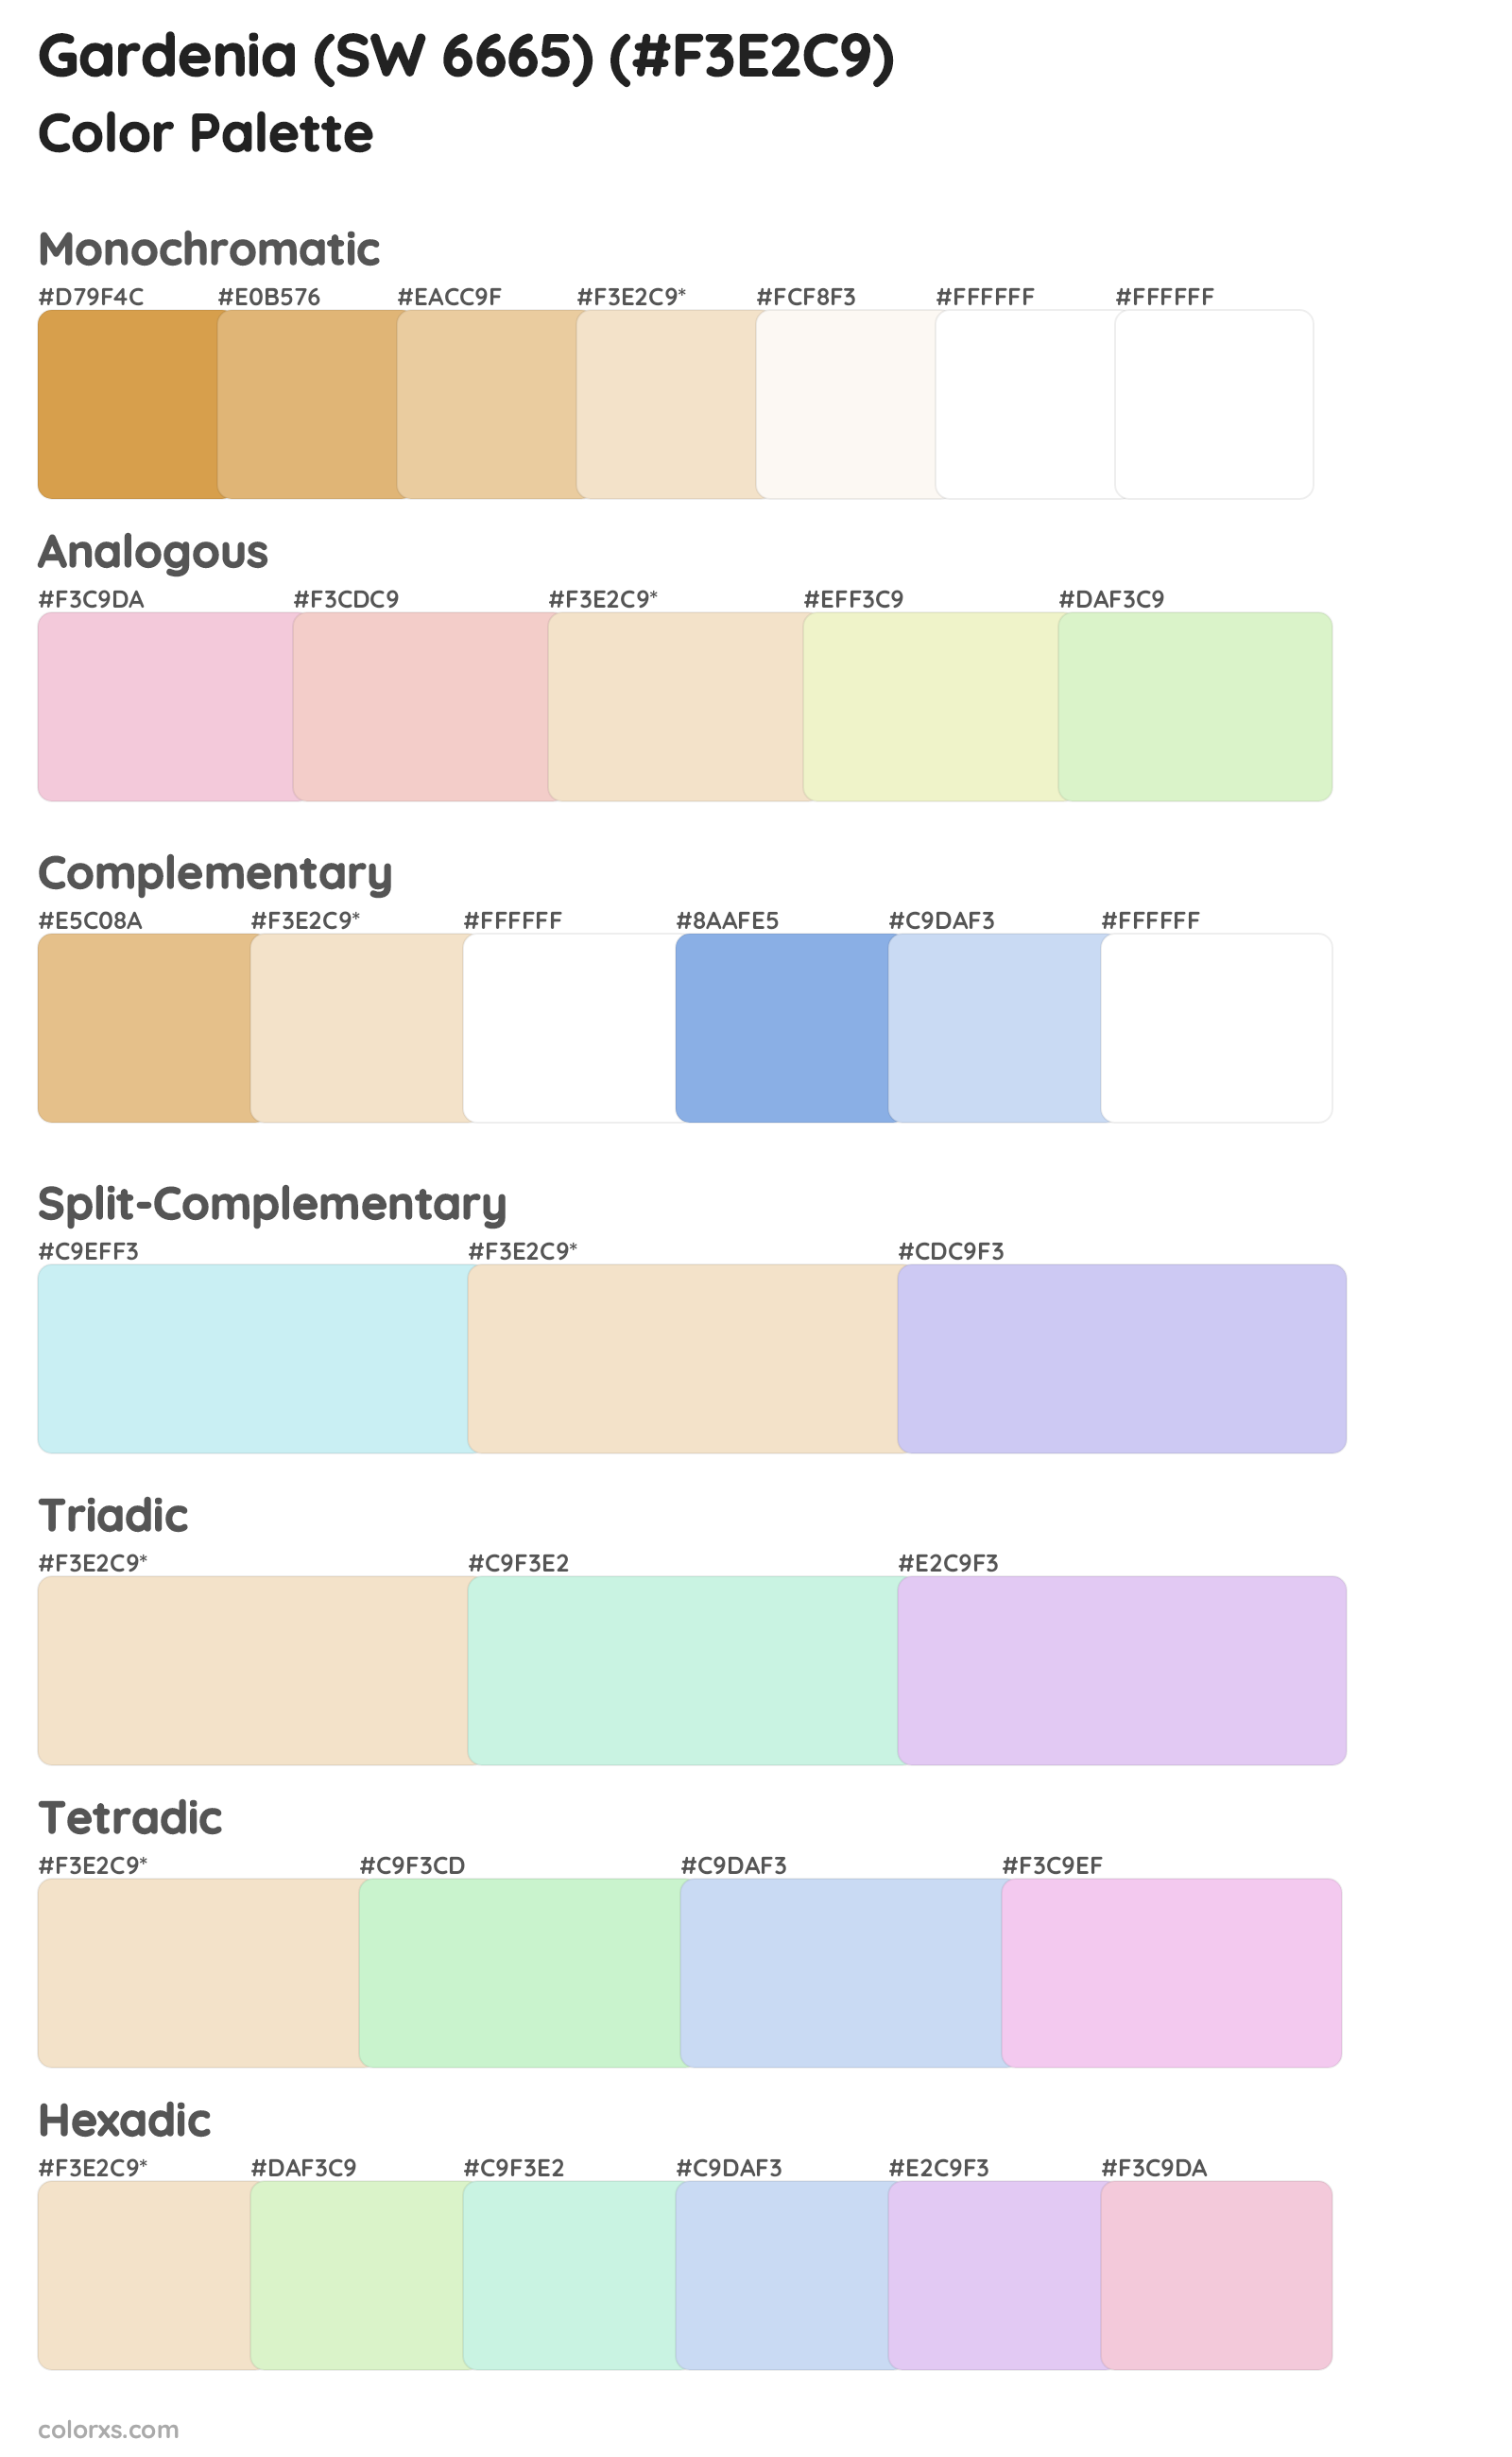 Gardenia (SW 6665) Color Scheme Palettes